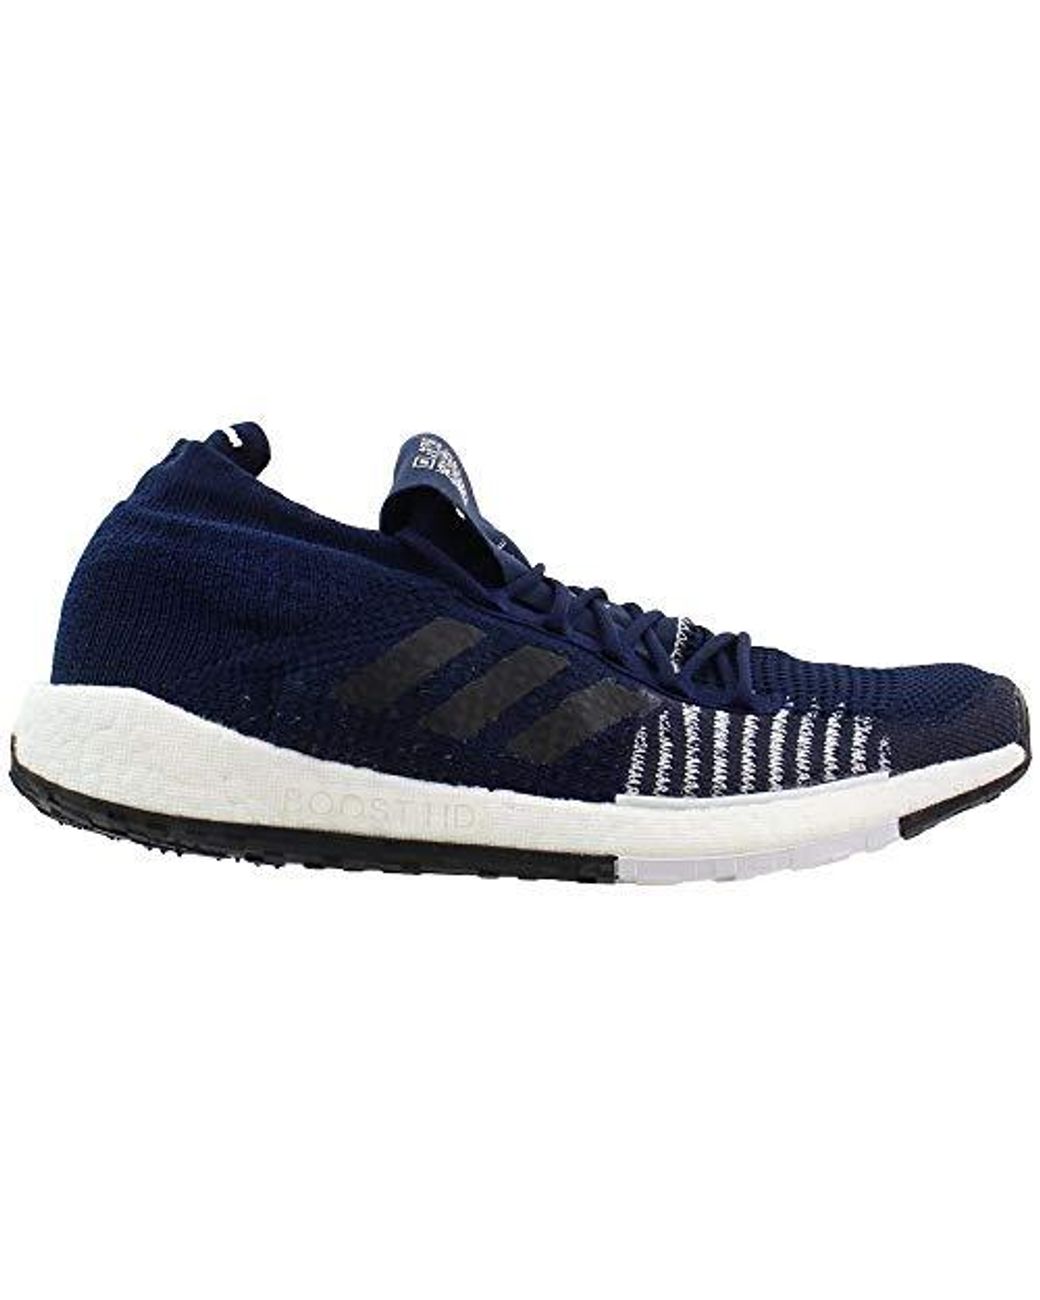 adidas Mens Pulseboost Hd Running Sneakers Shoes - Blue, Blue, 6.5 M ...